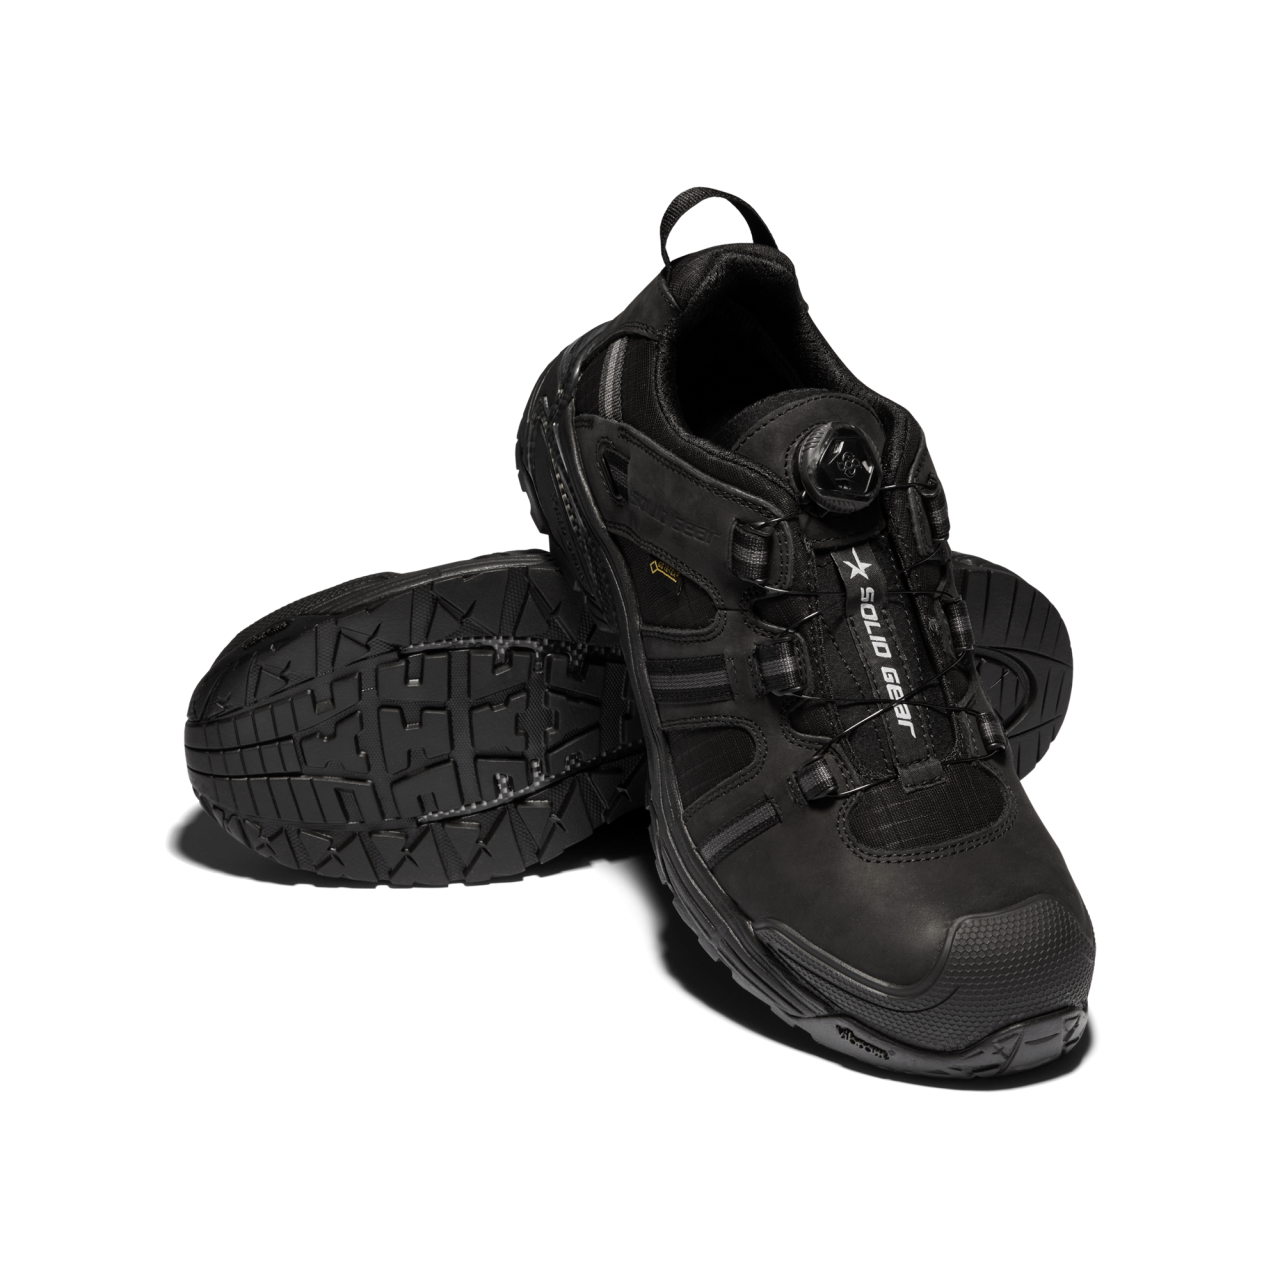 Zapato de seguridad S3 Enforcer GTX talla 36